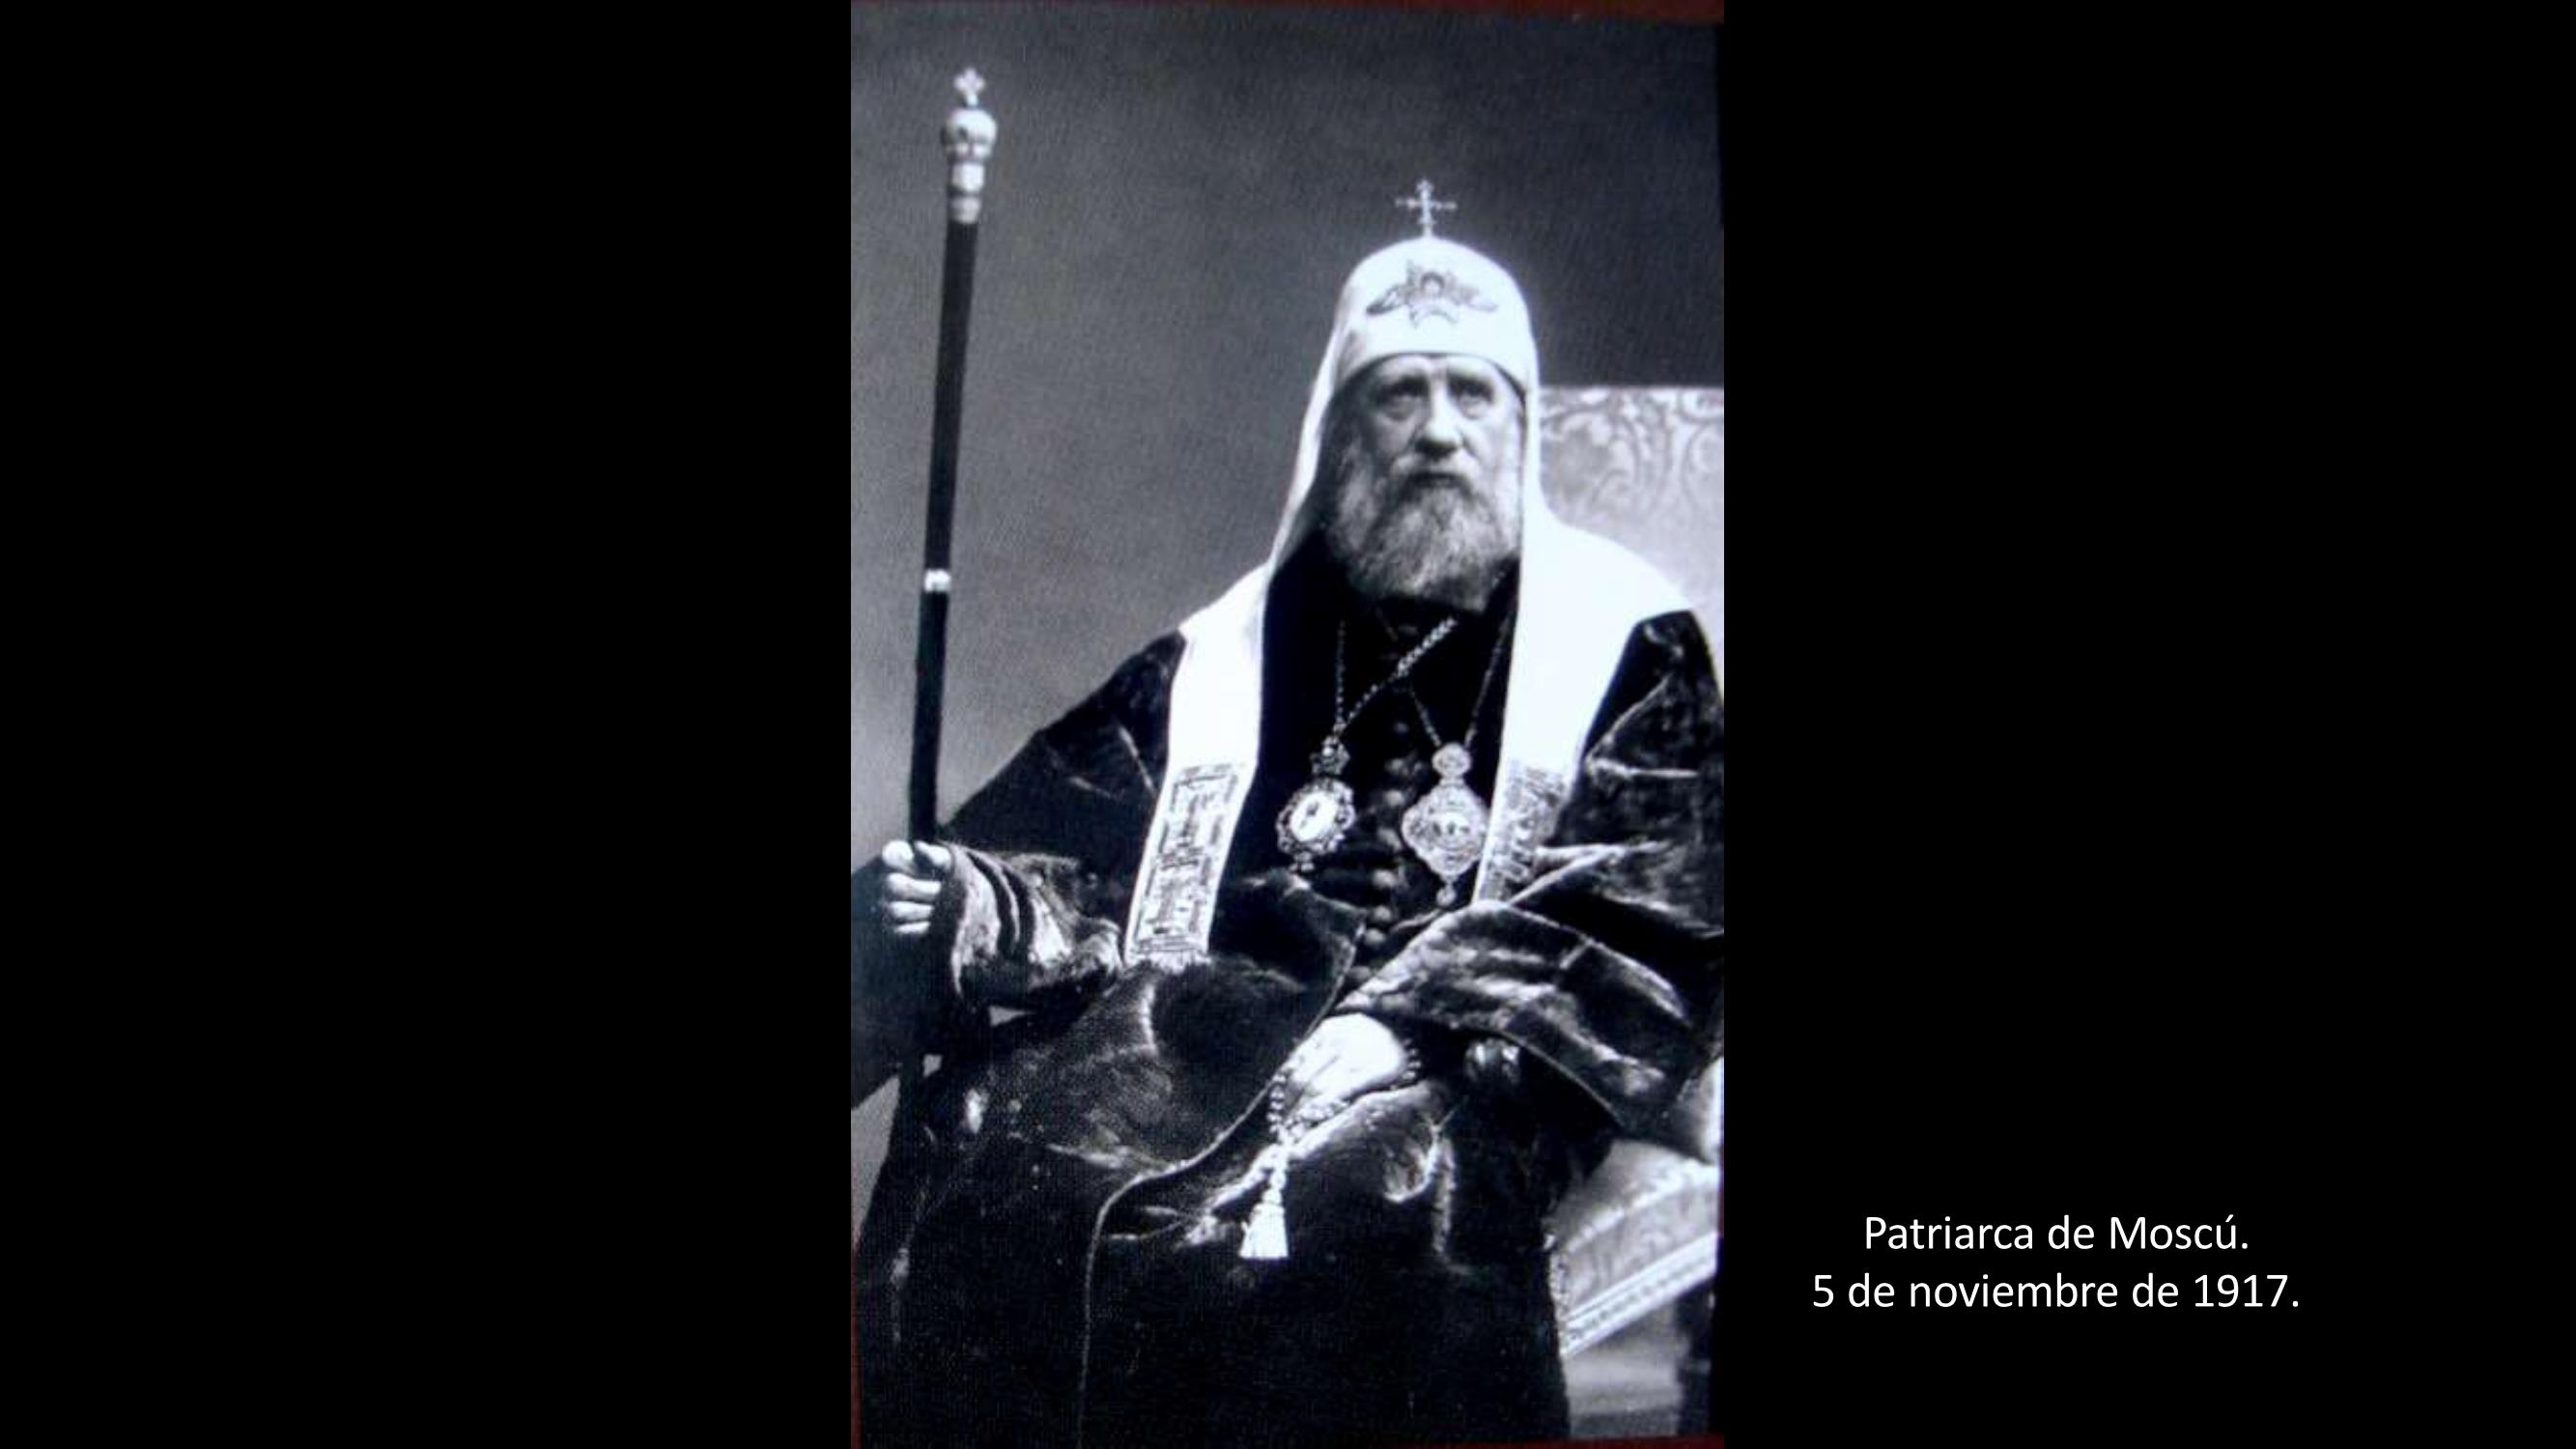 [26] Patriarca de Moscou, 1917